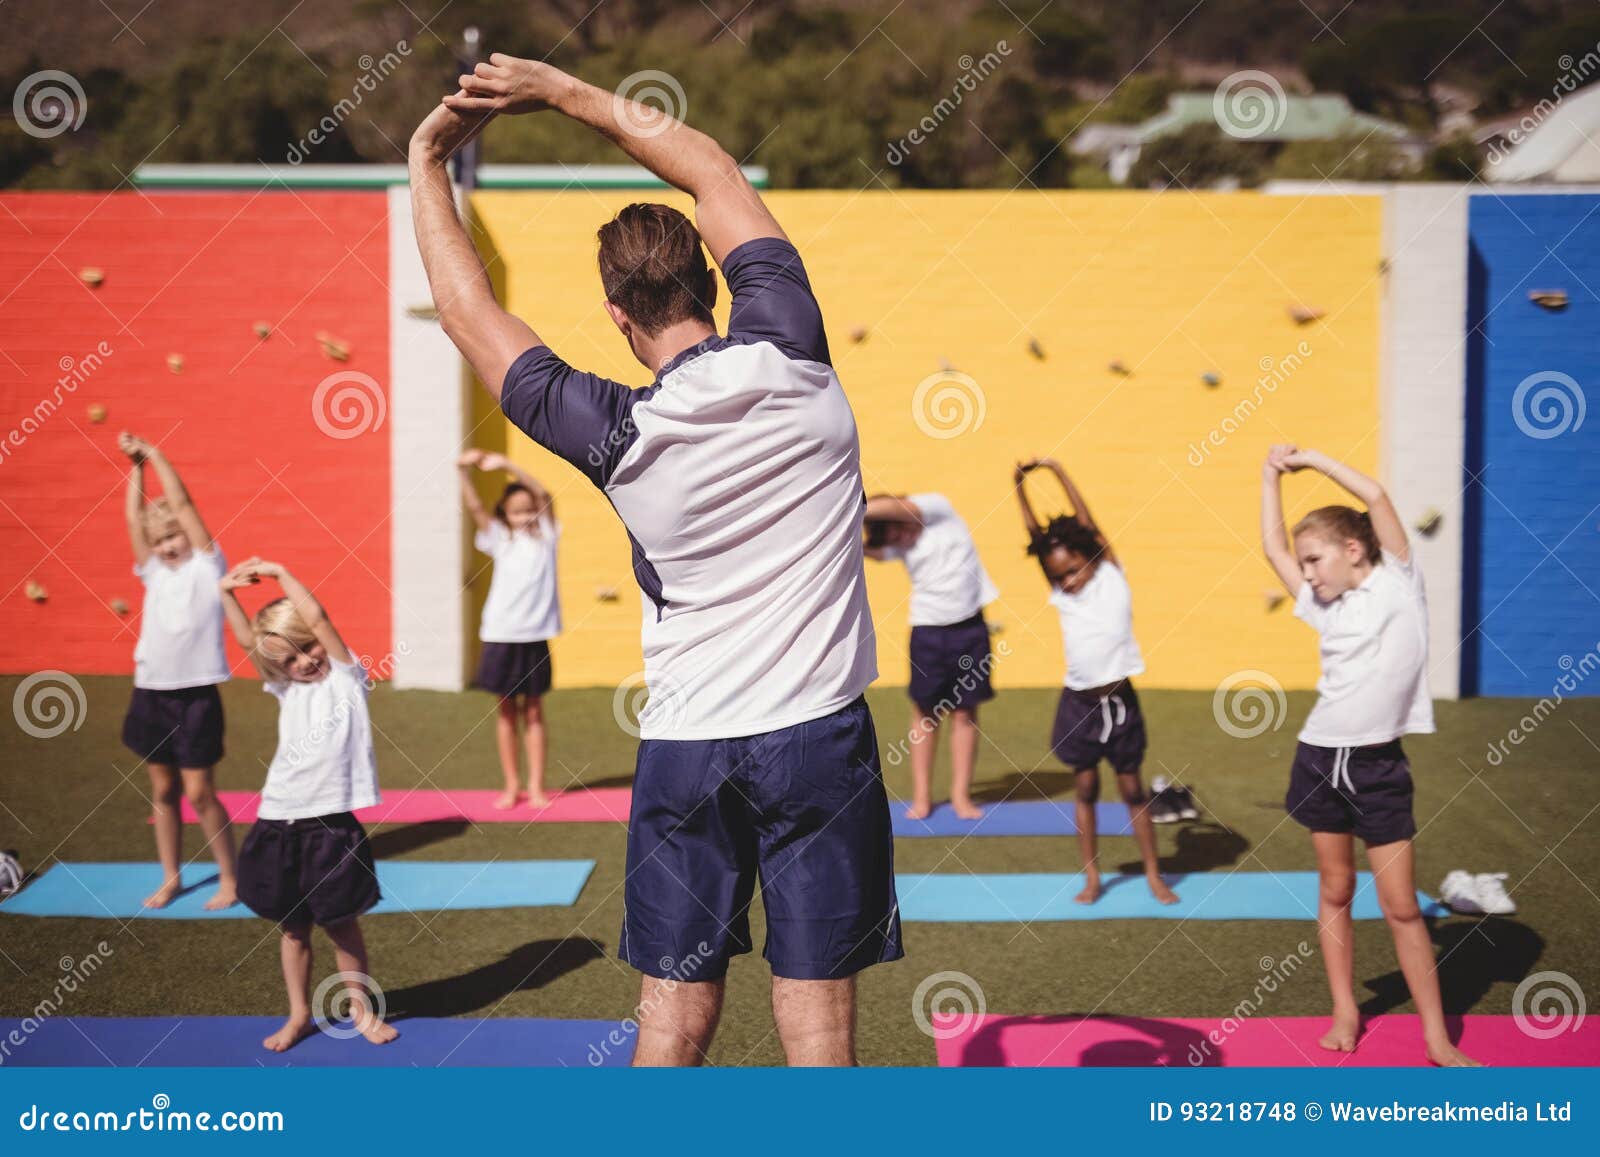 Coach Teaching Exercise To School Kids Stock Photo Image